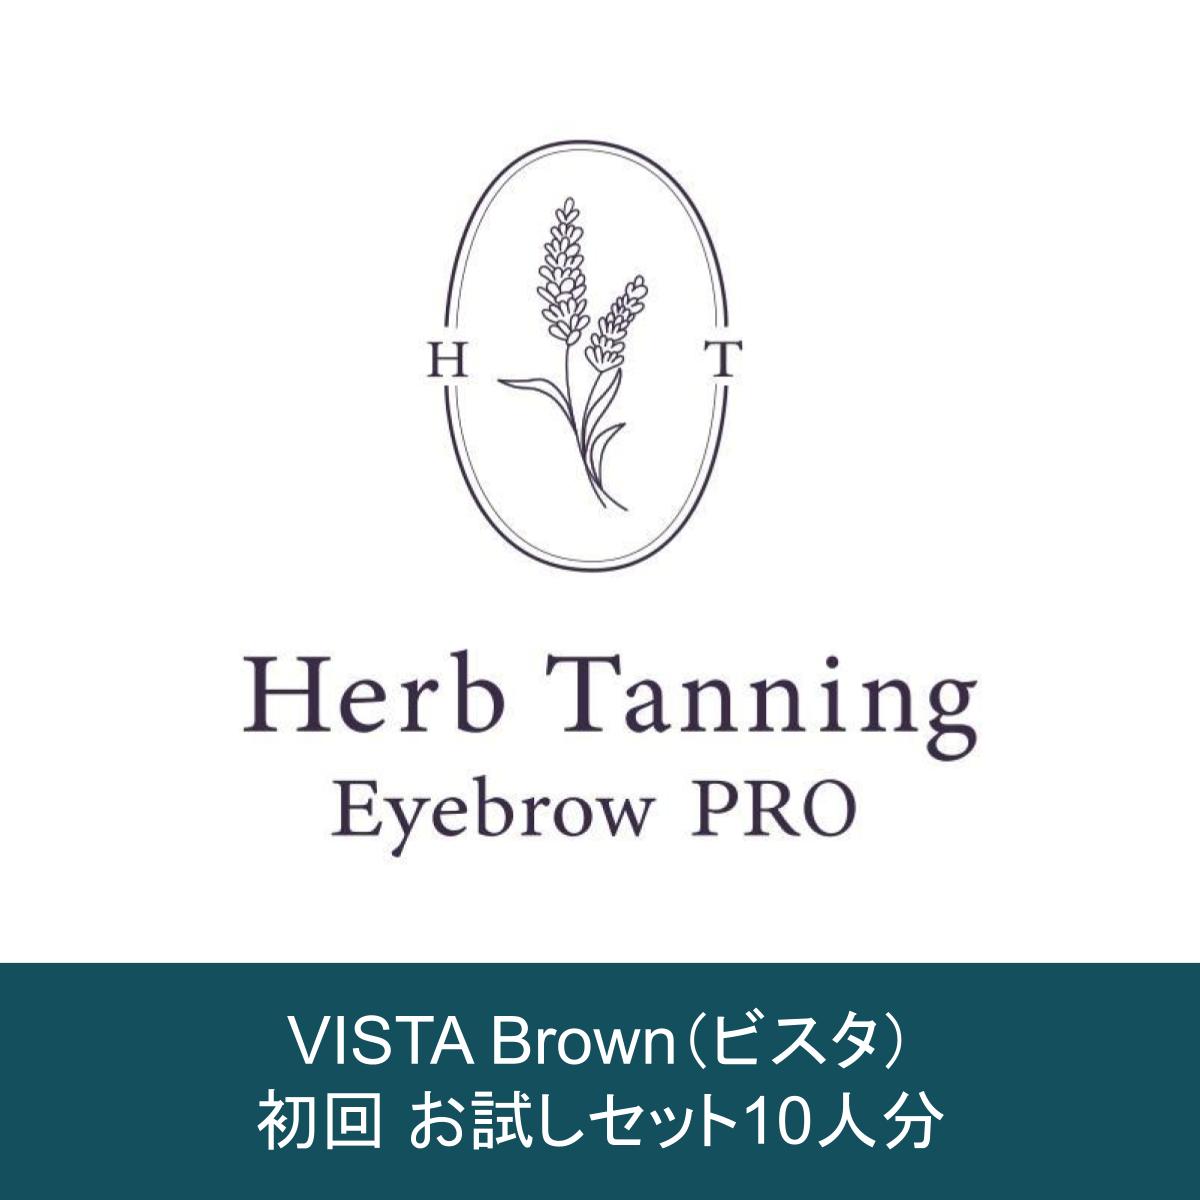 【Herb Tanning Eyebrow PRO】 ビスタブラウン 初回セット